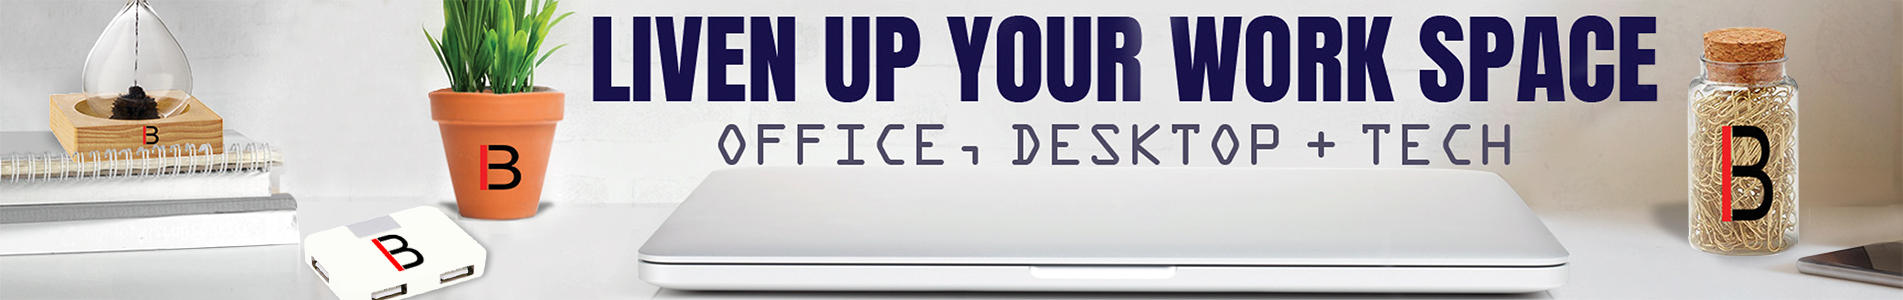 Office, Desktop & Tech